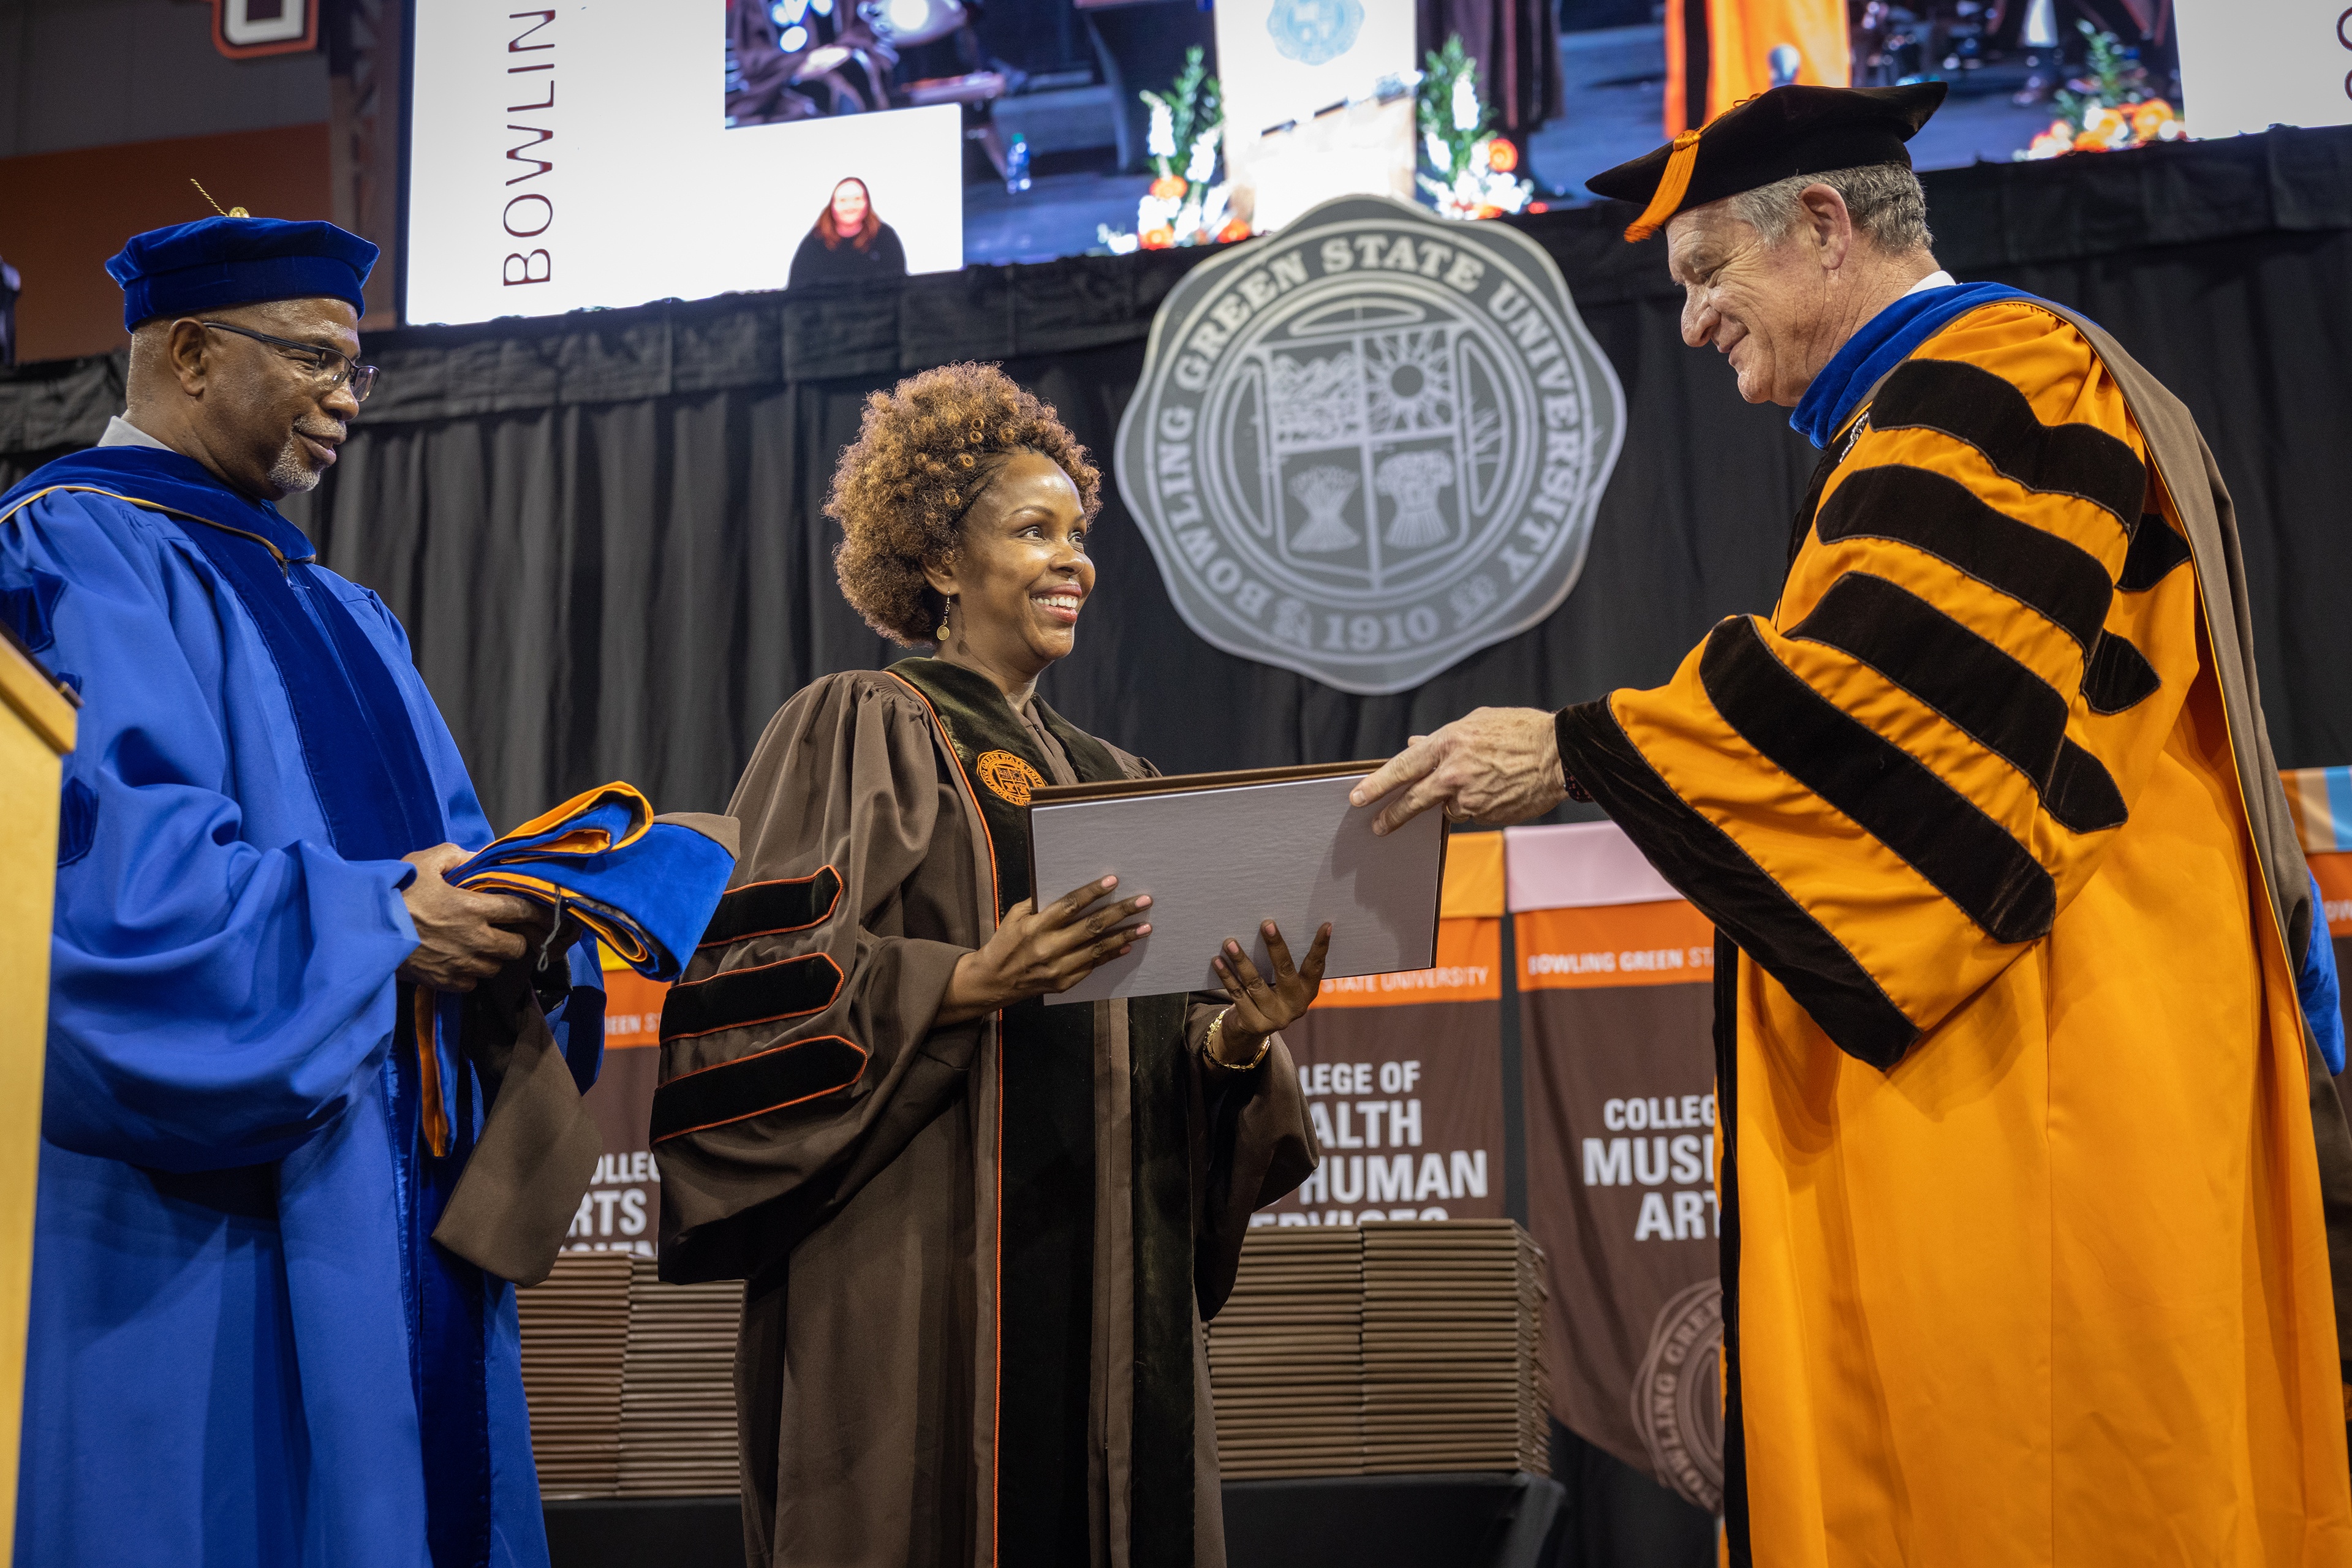 A woman accepts a framed document and graduation regalia from BGSU President Rodney K. Rogers and Provost Joe B. Whitehead Jr. 